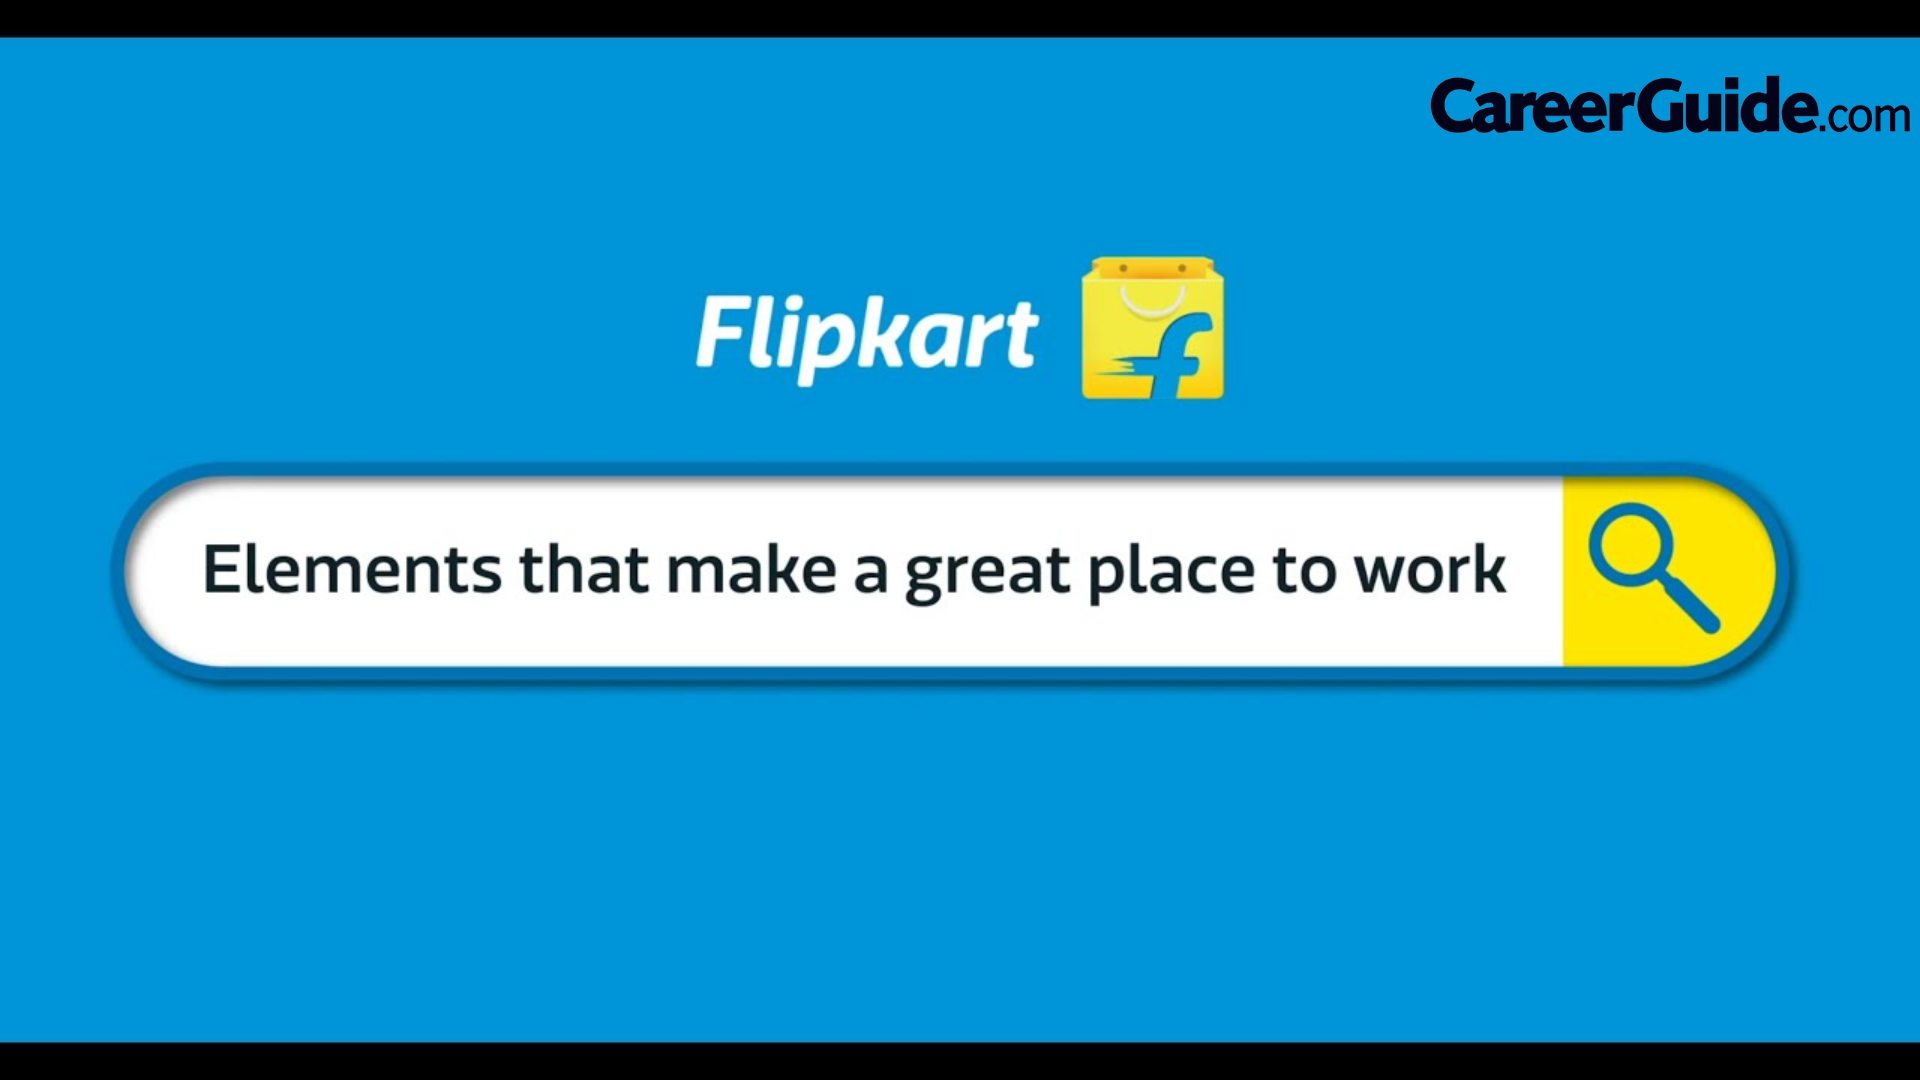 Flipkart Offers A Great Workplace Culture